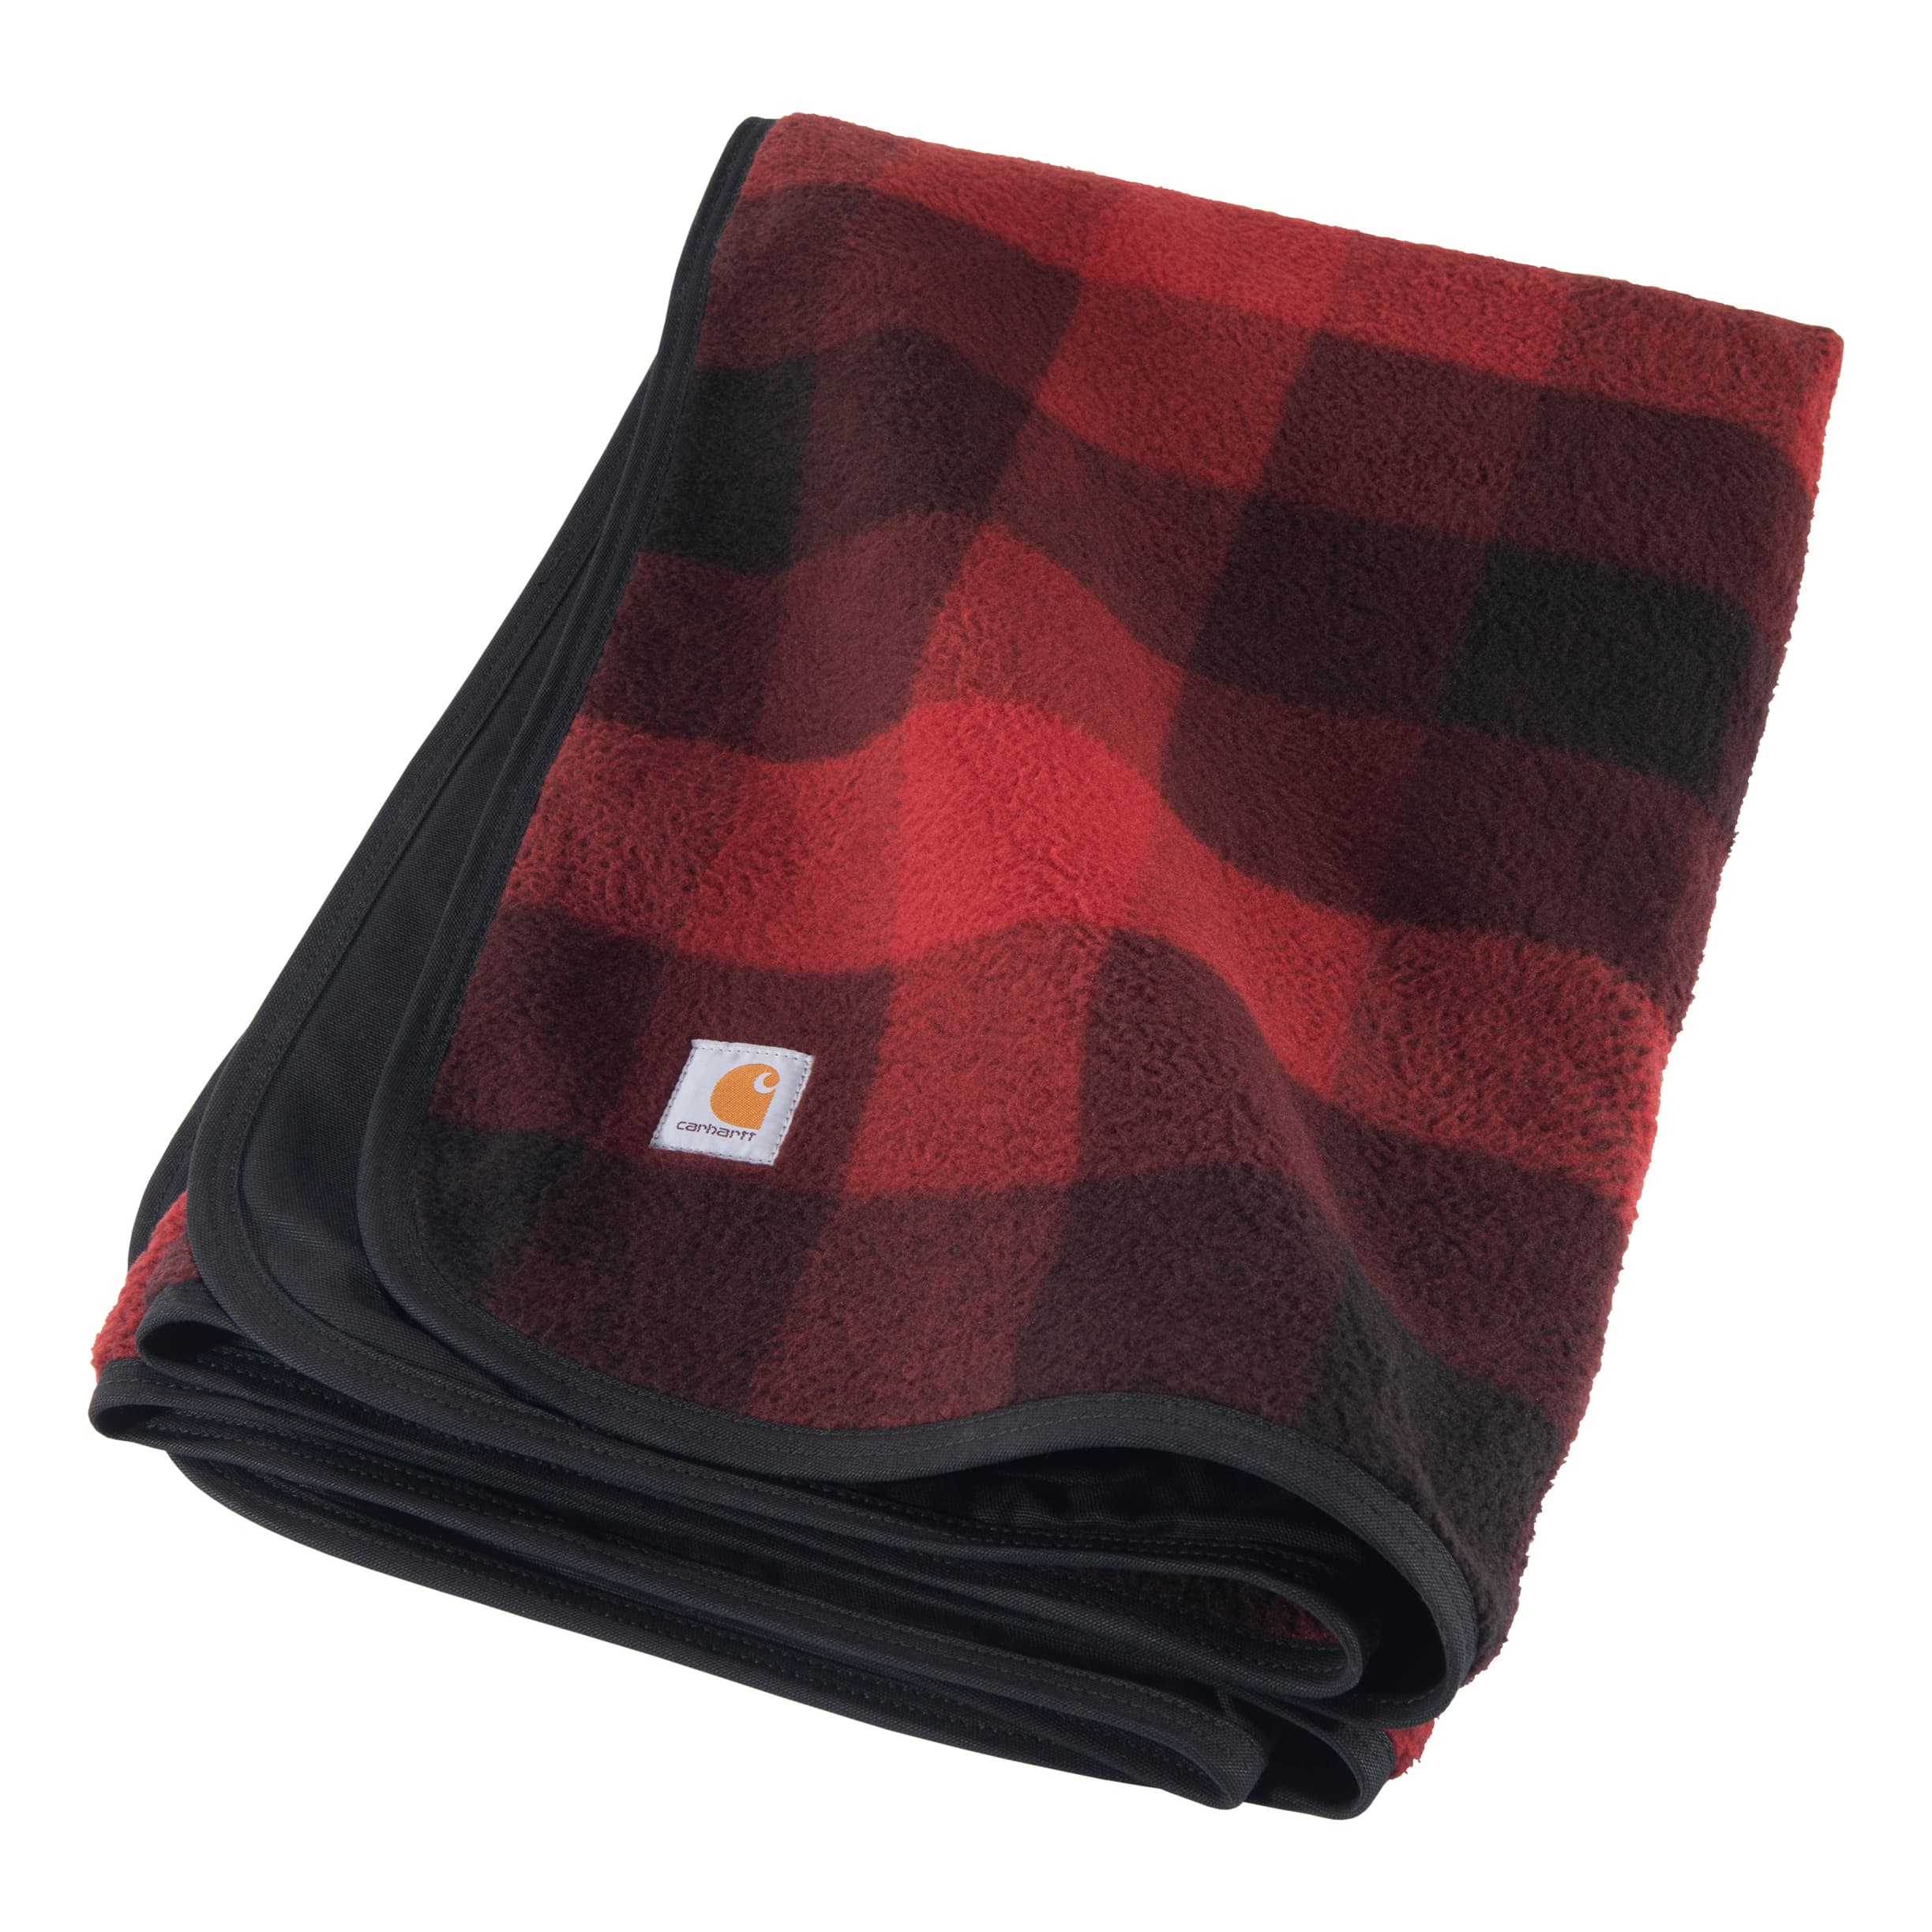 Carhartt® Firm Duck Plaid Blanket